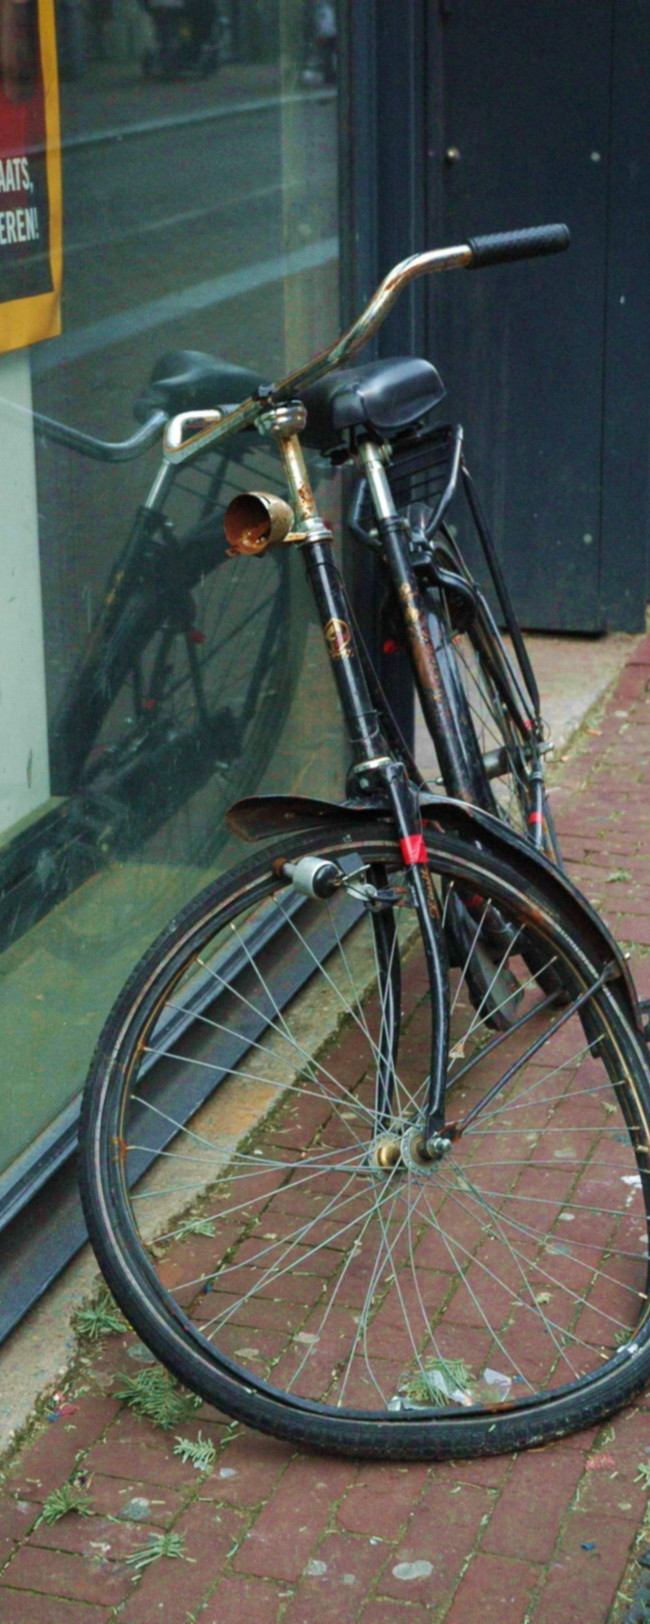 Bike with Bent Wheel